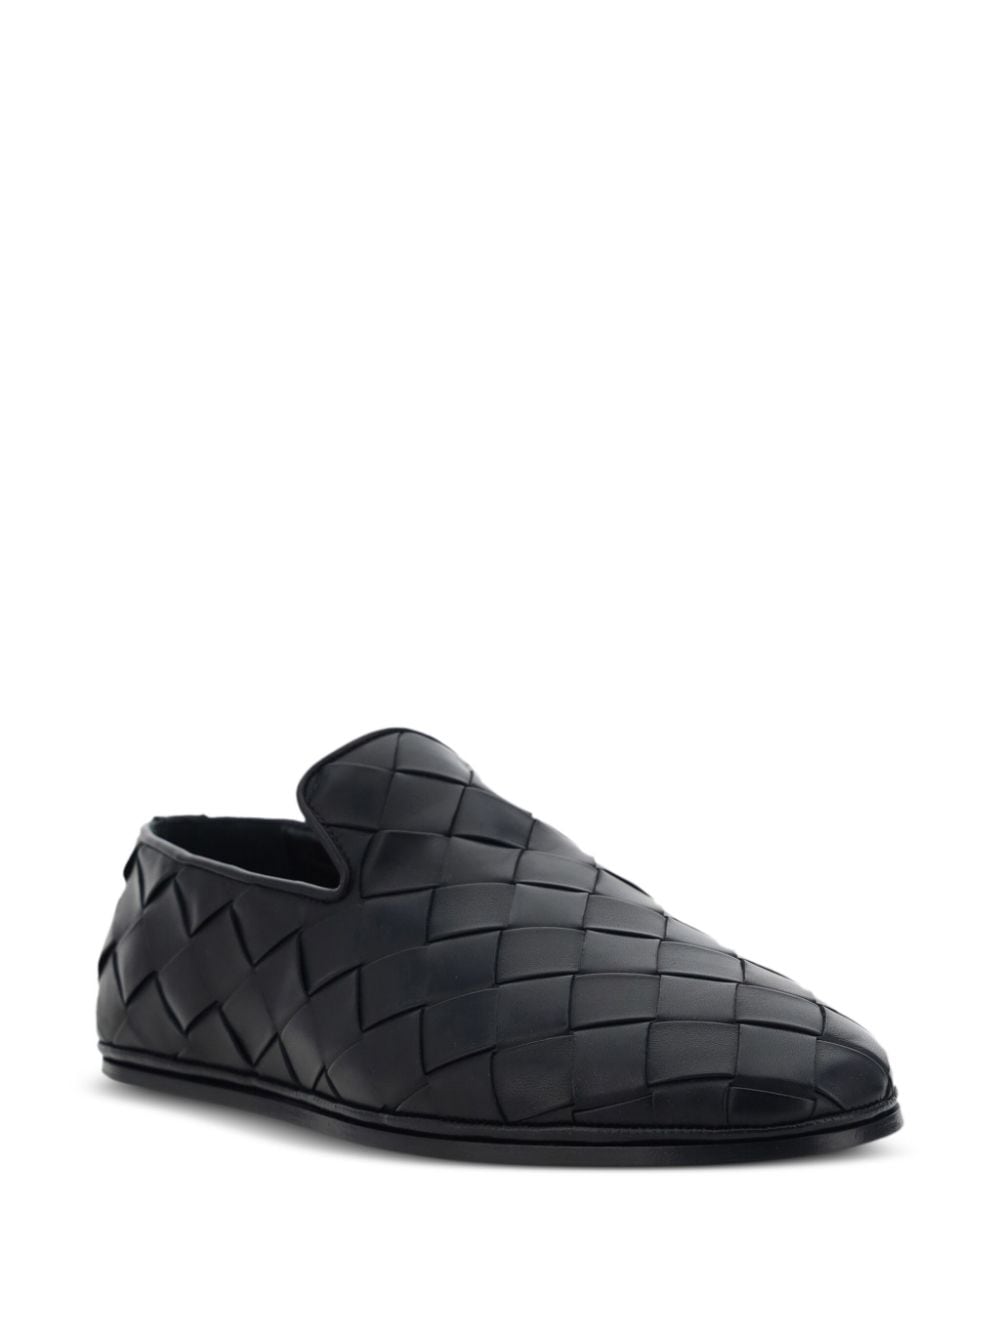 Bottega Veneta Sunday Intrecciato leather loafers - Zwart